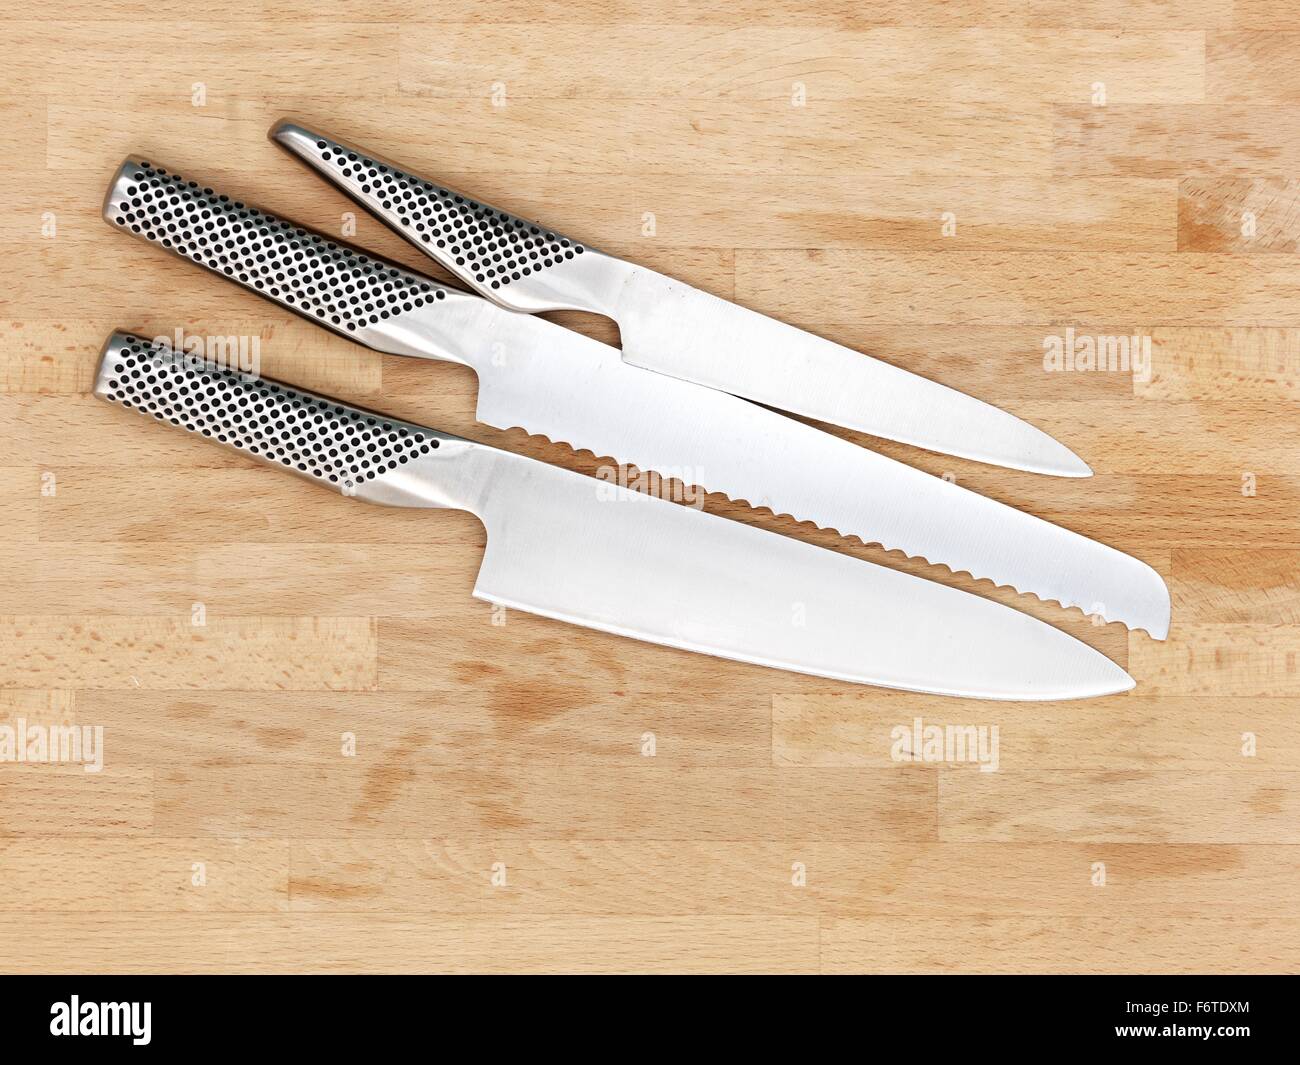 https://c8.alamy.com/comp/F6TDXM/a-studio-photo-of-kitchen-knives-F6TDXM.jpg